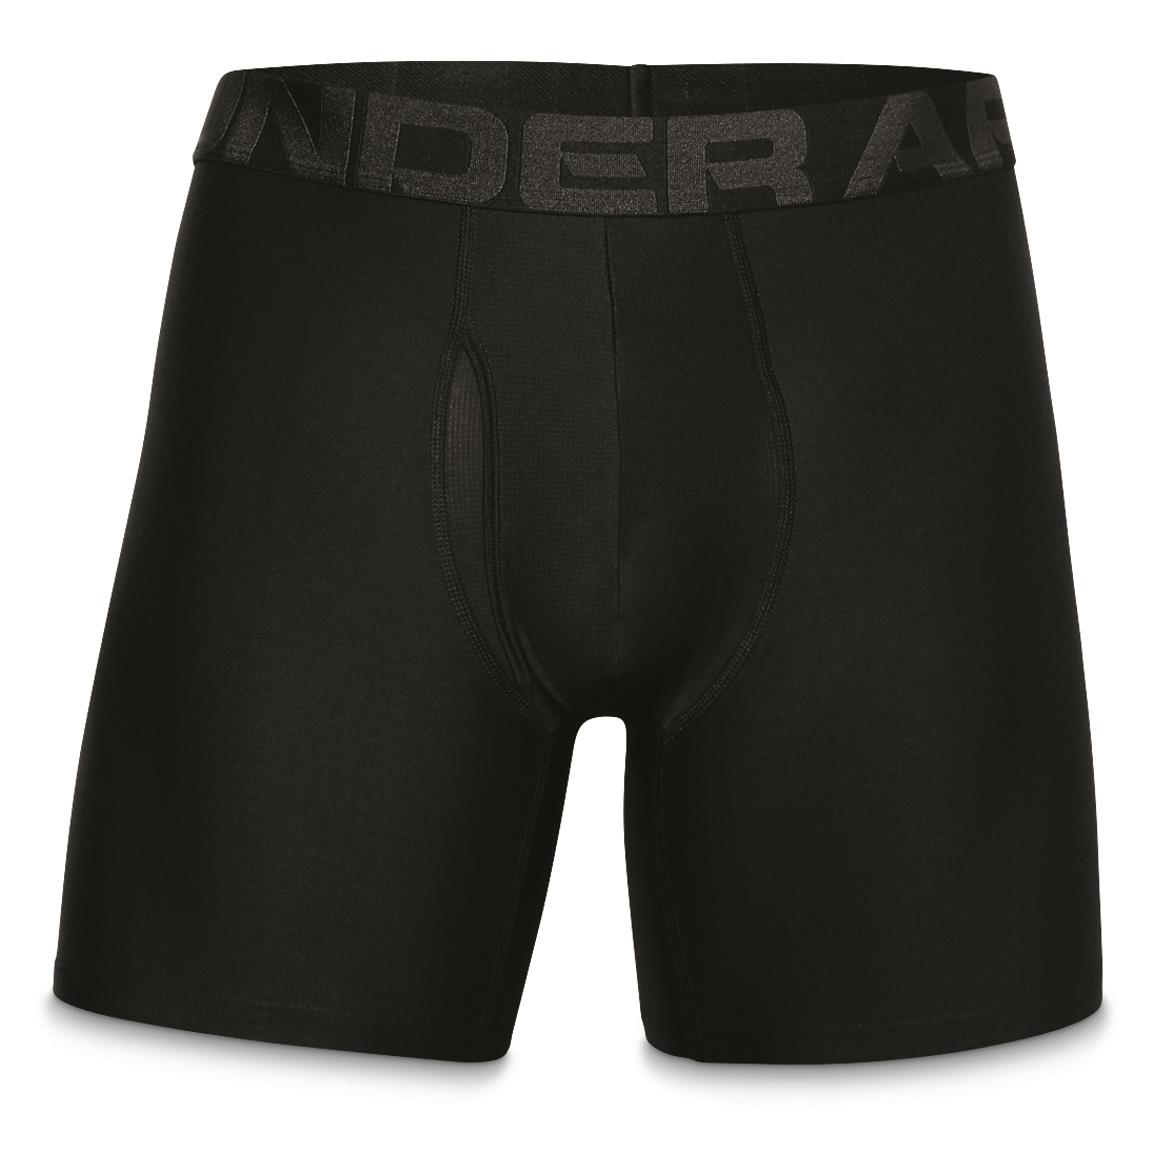 Under Armour Men's Tech 6" Boxerjock Underwear, 2 Pack, Black/Black